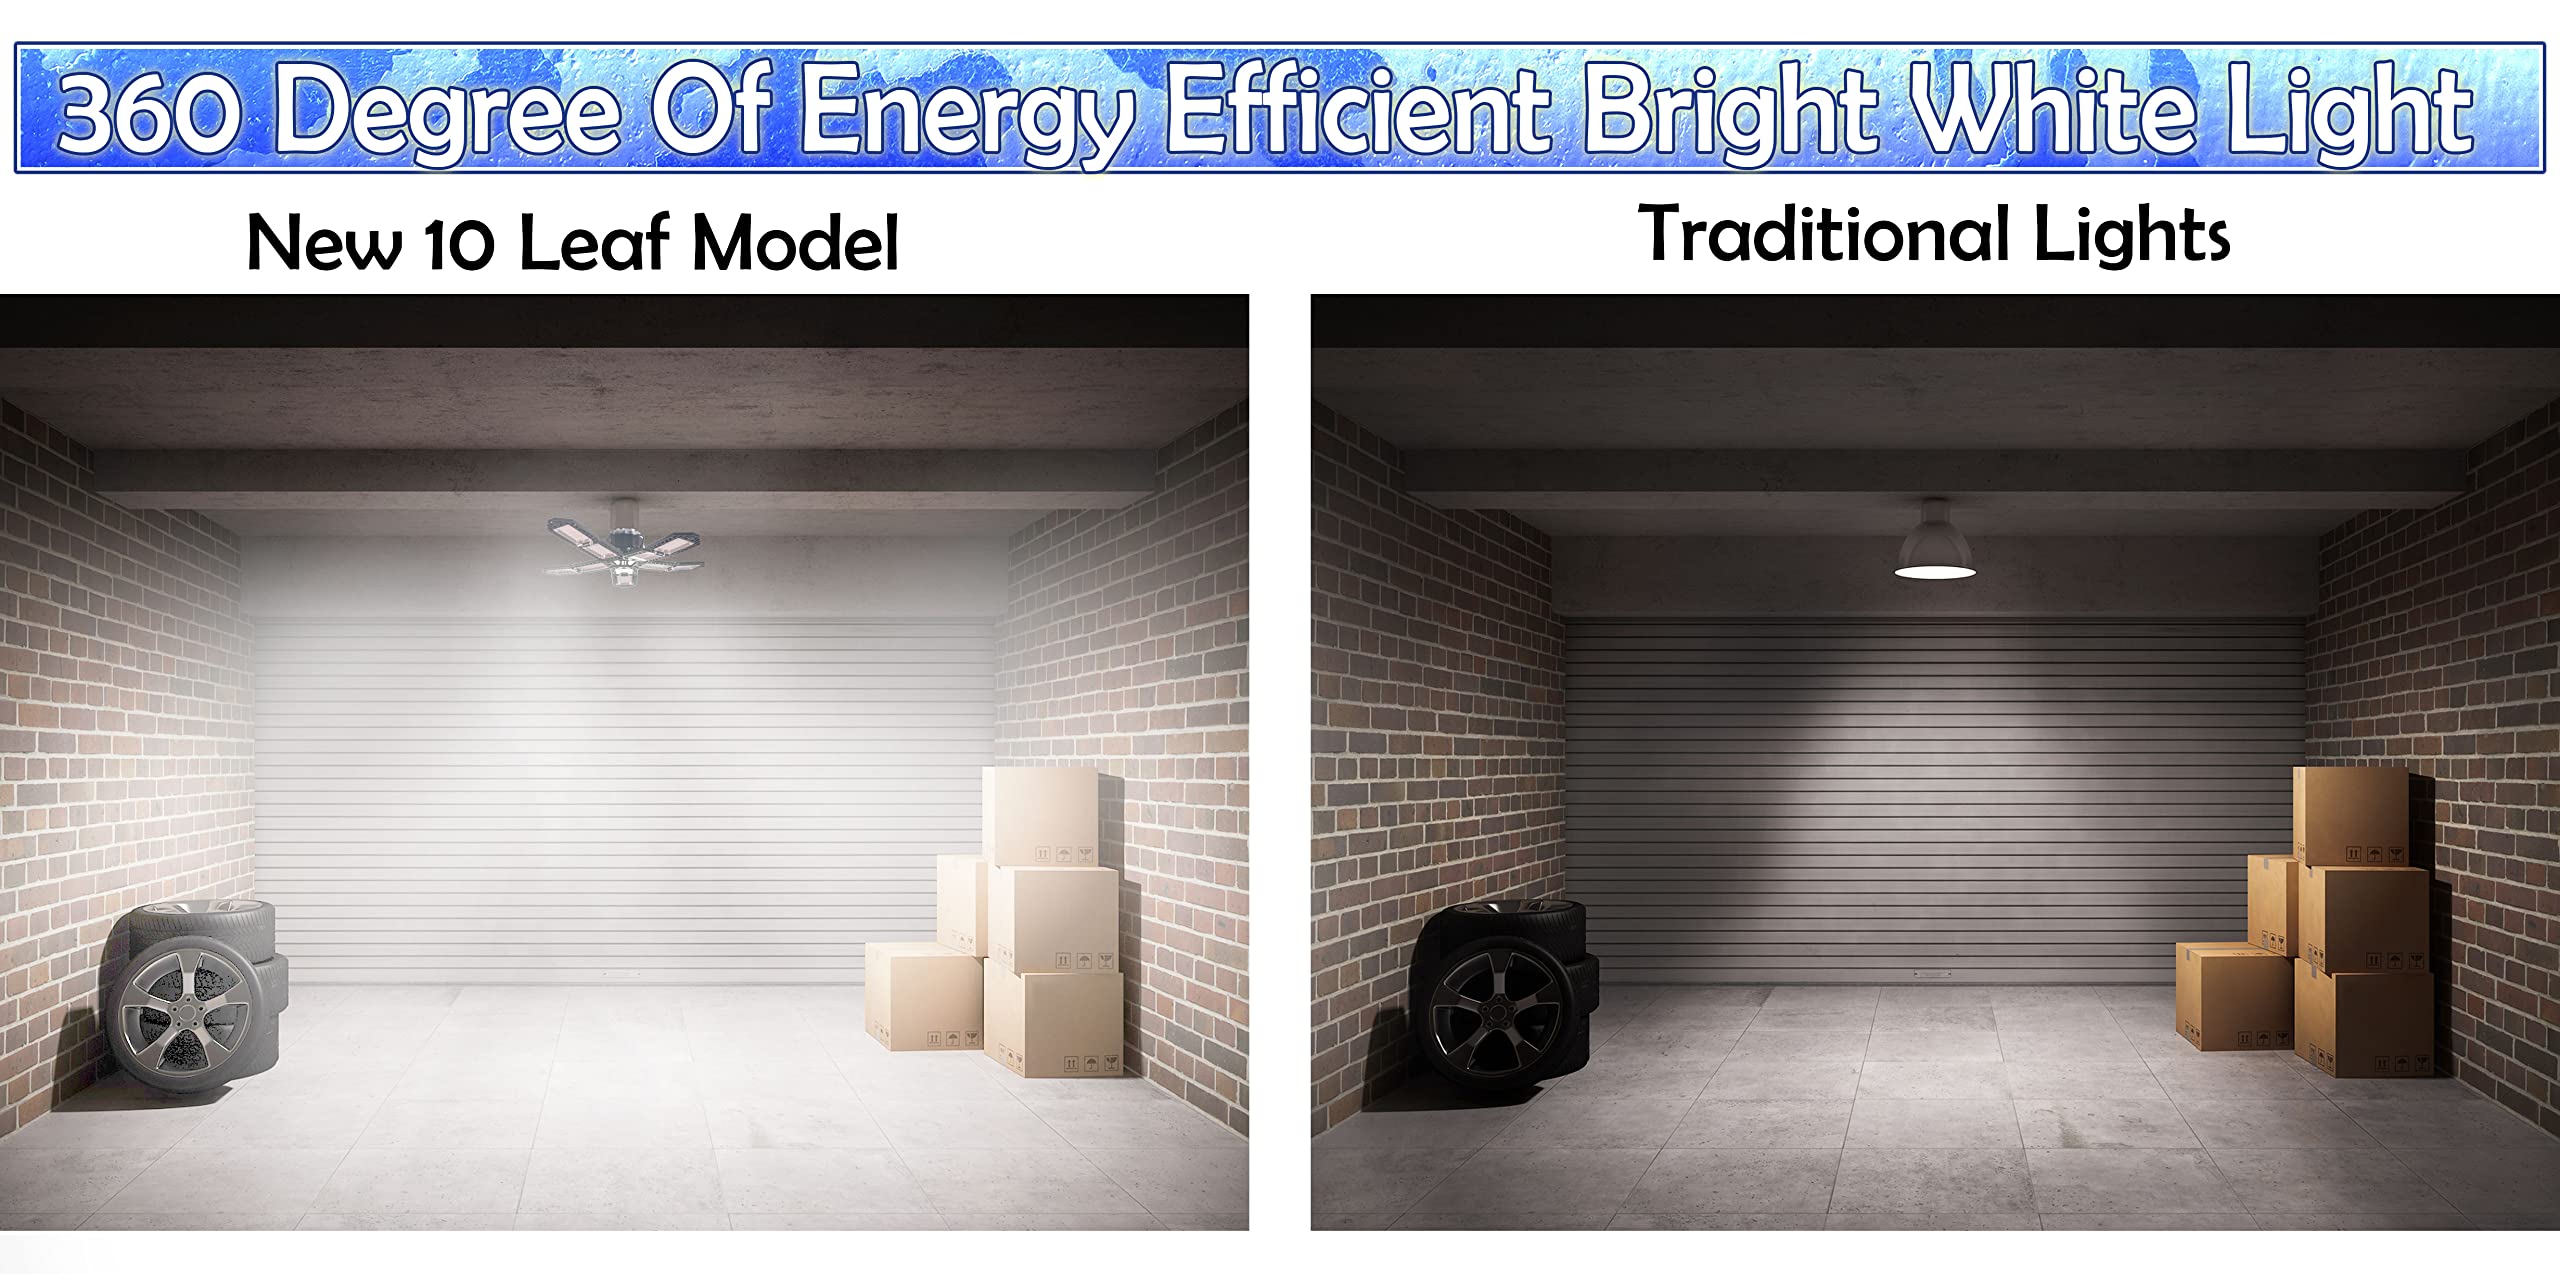 10 LED Leaf Deformable Panel Ceiling Light - 256 LEDs Ultra Bright Adjustable Garage, Workshop, Basement Light - Screws Into Existing Light Bulb Sockets E26/E27 - 150W Pure White 6500K - 10000 Lumens